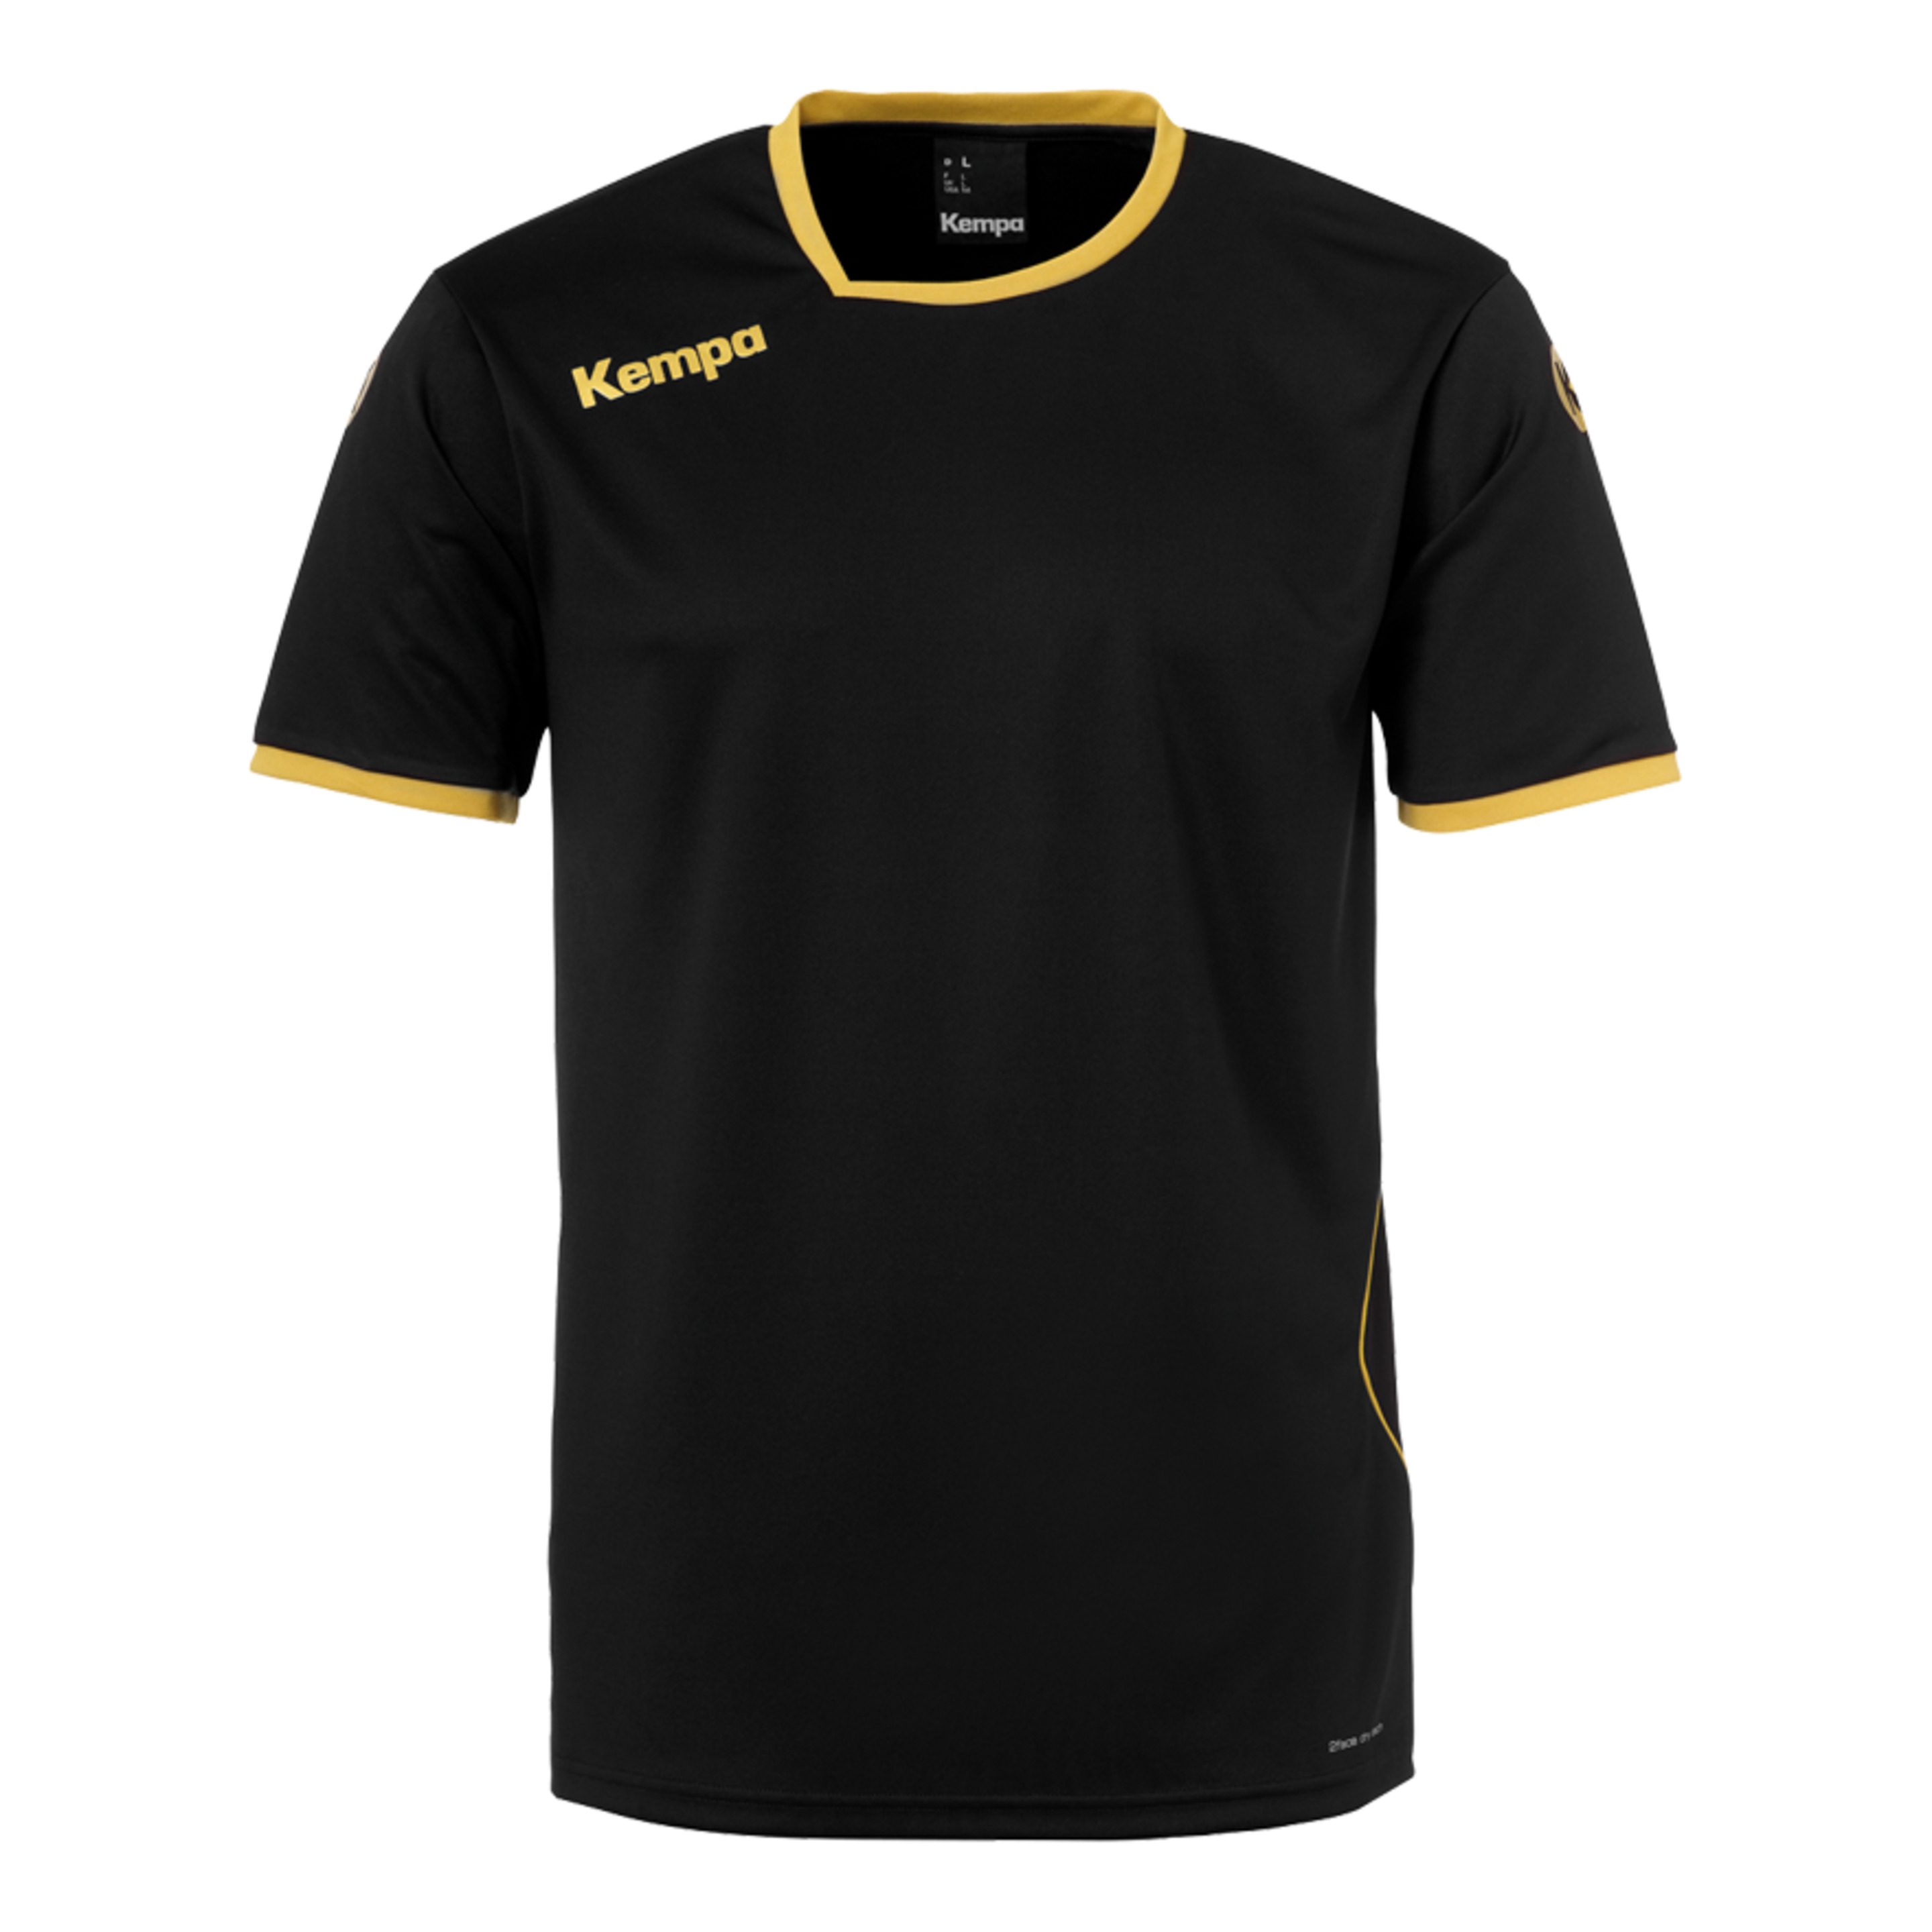 Curve Camiseta Negro/dorado Kempa - negro - 